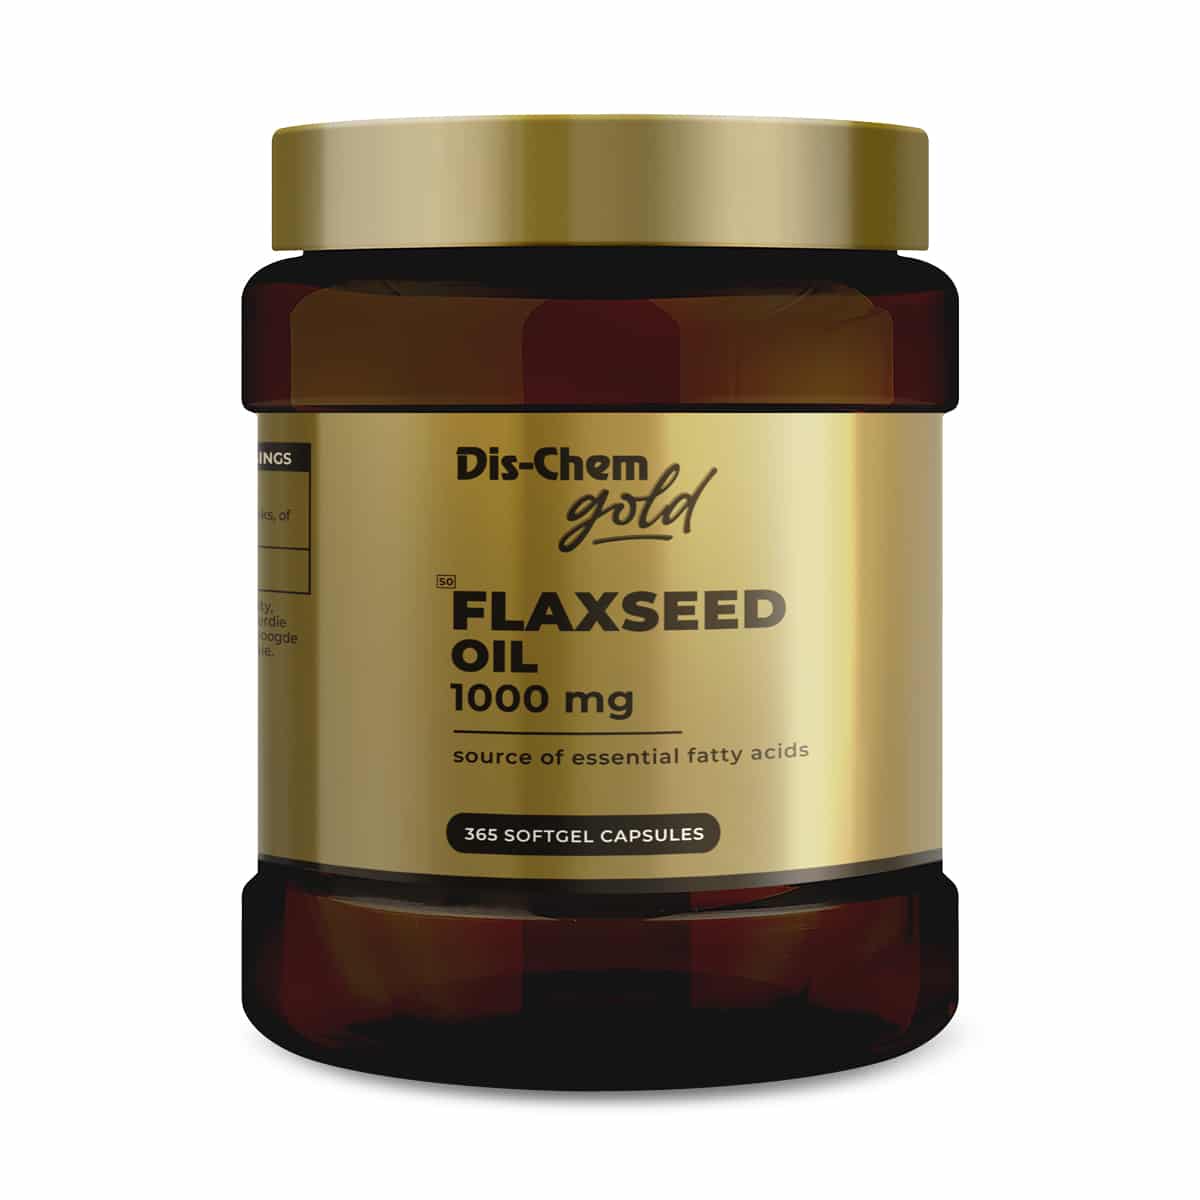 Dis-Chem Gold Flaxseed Oil 1000mg - 365 Softgel Caps